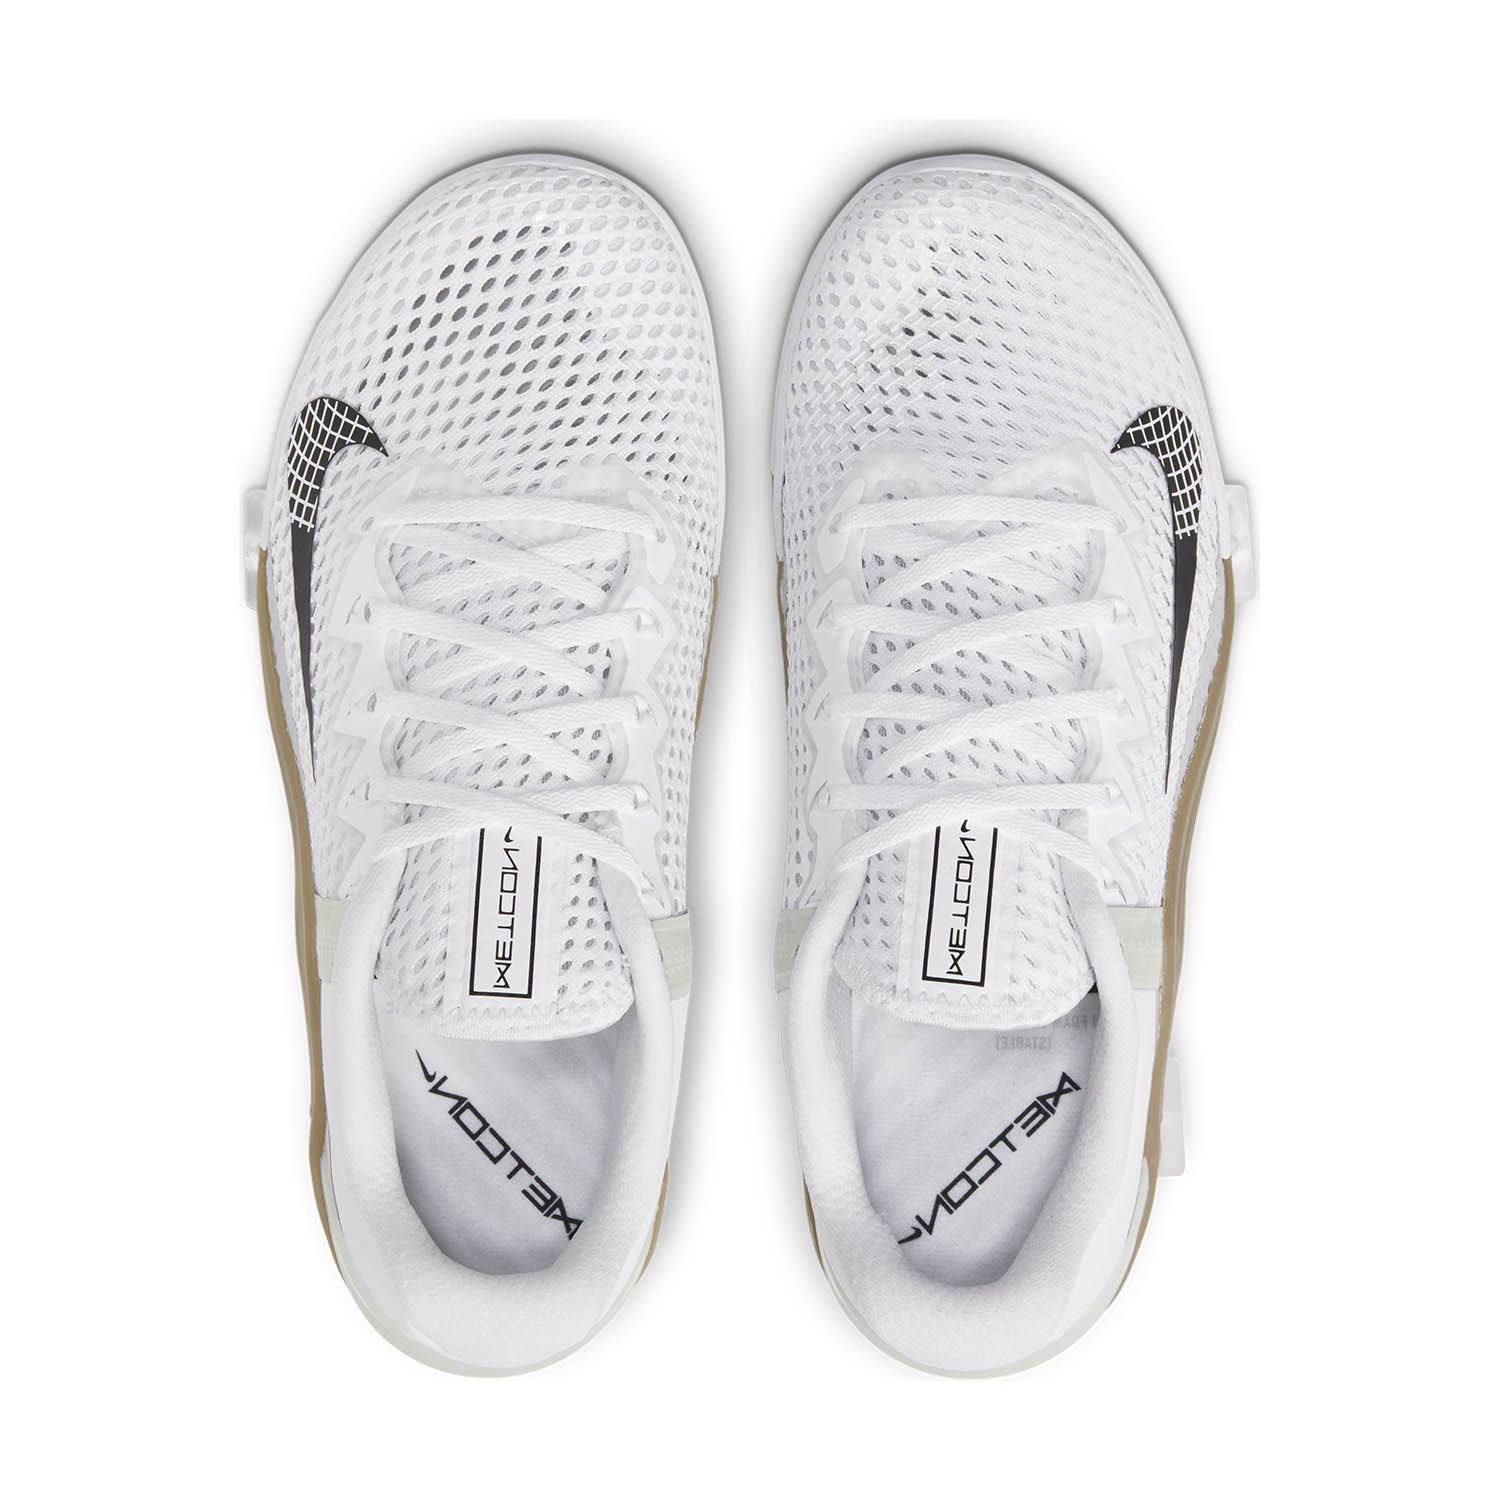 Nike Metcon 6 Training Shoes - White/Black Gum/Dark Brown